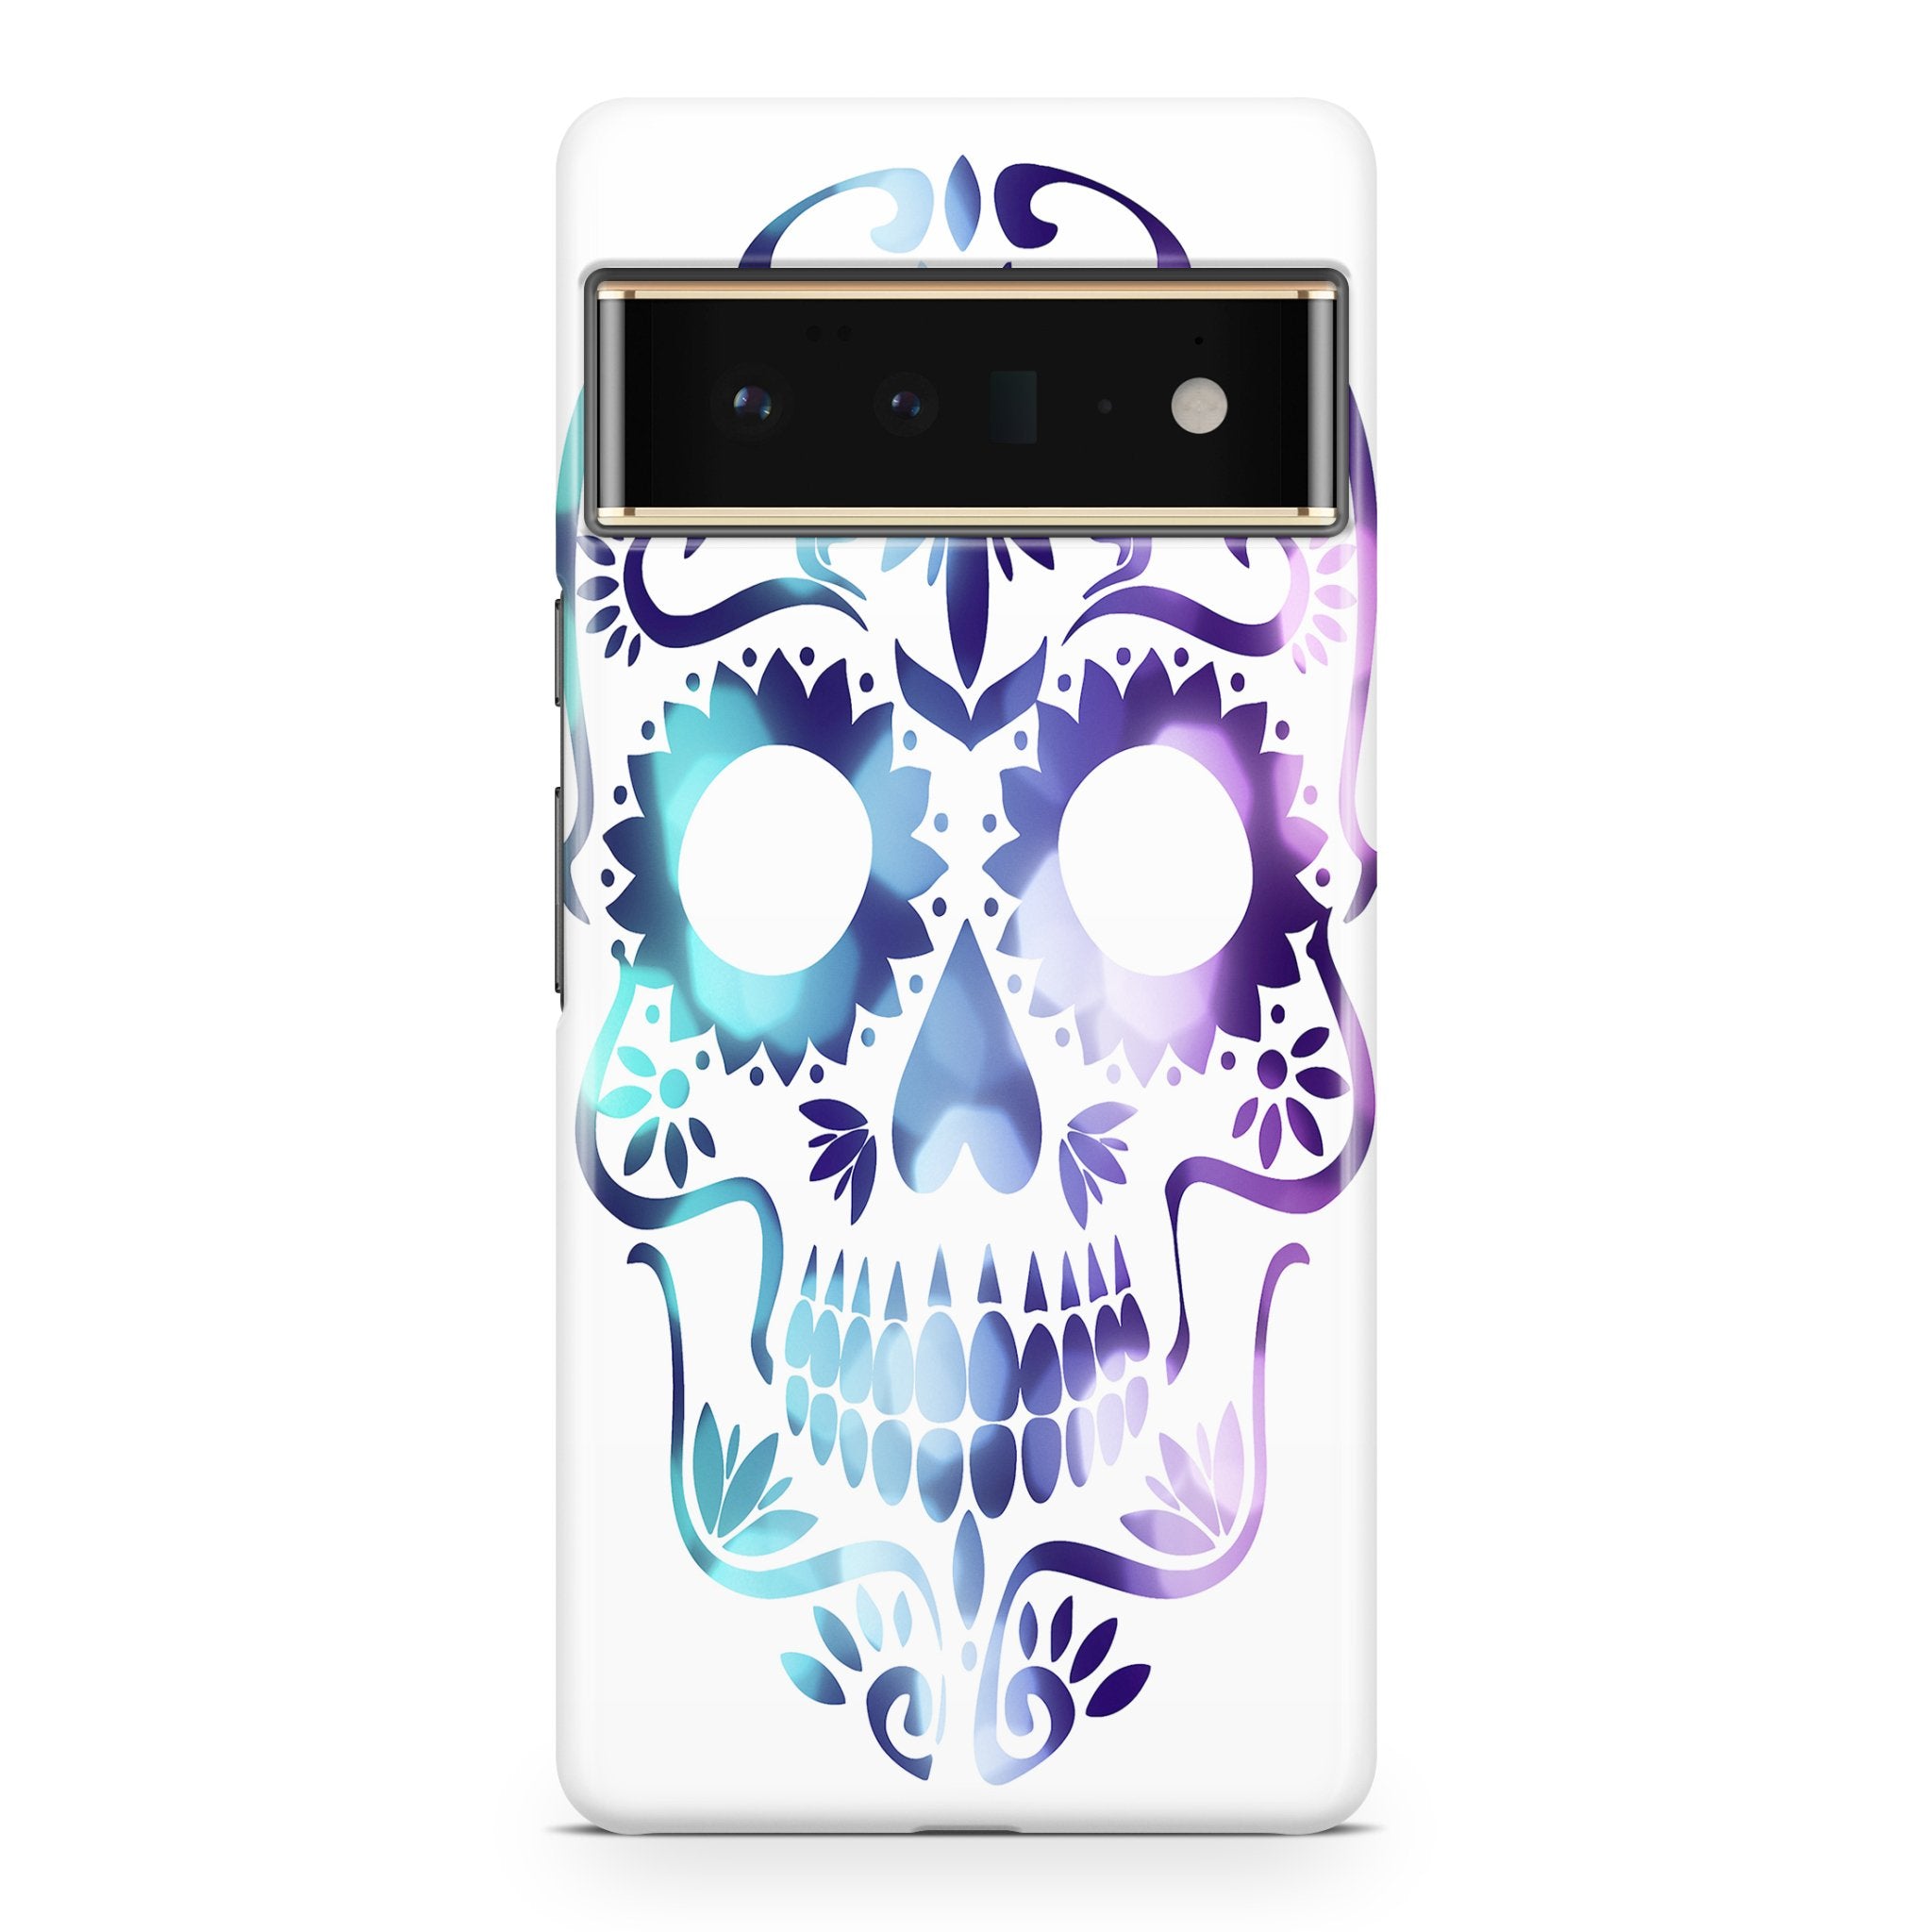 Vertex Mind - Google phone case designs by CaseSwagger